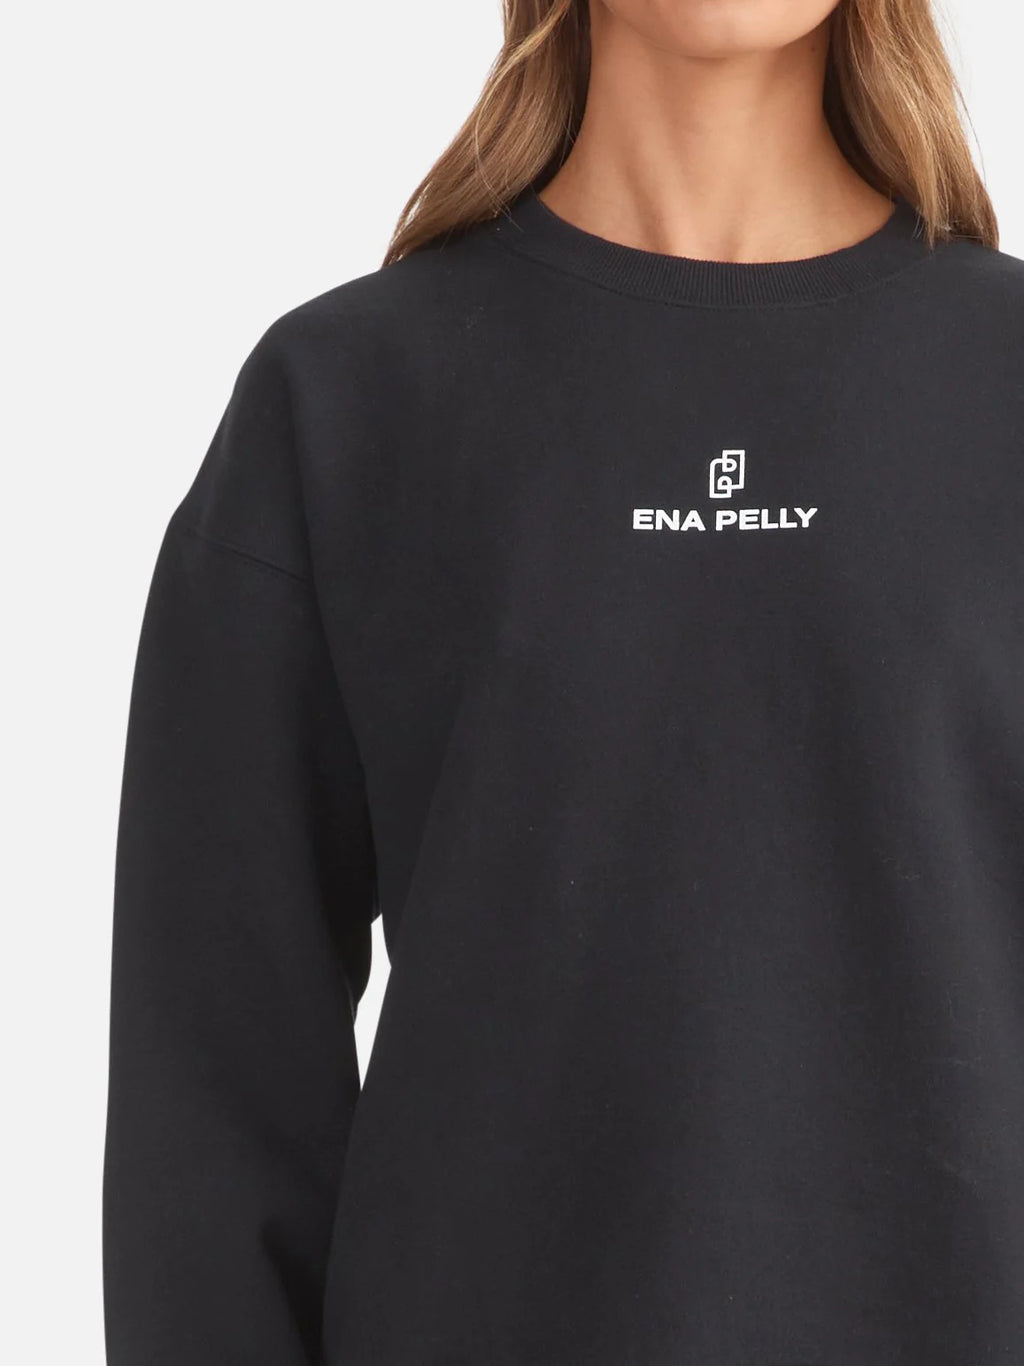 ENA PELLY - Lexi Monogram Sweater - Black